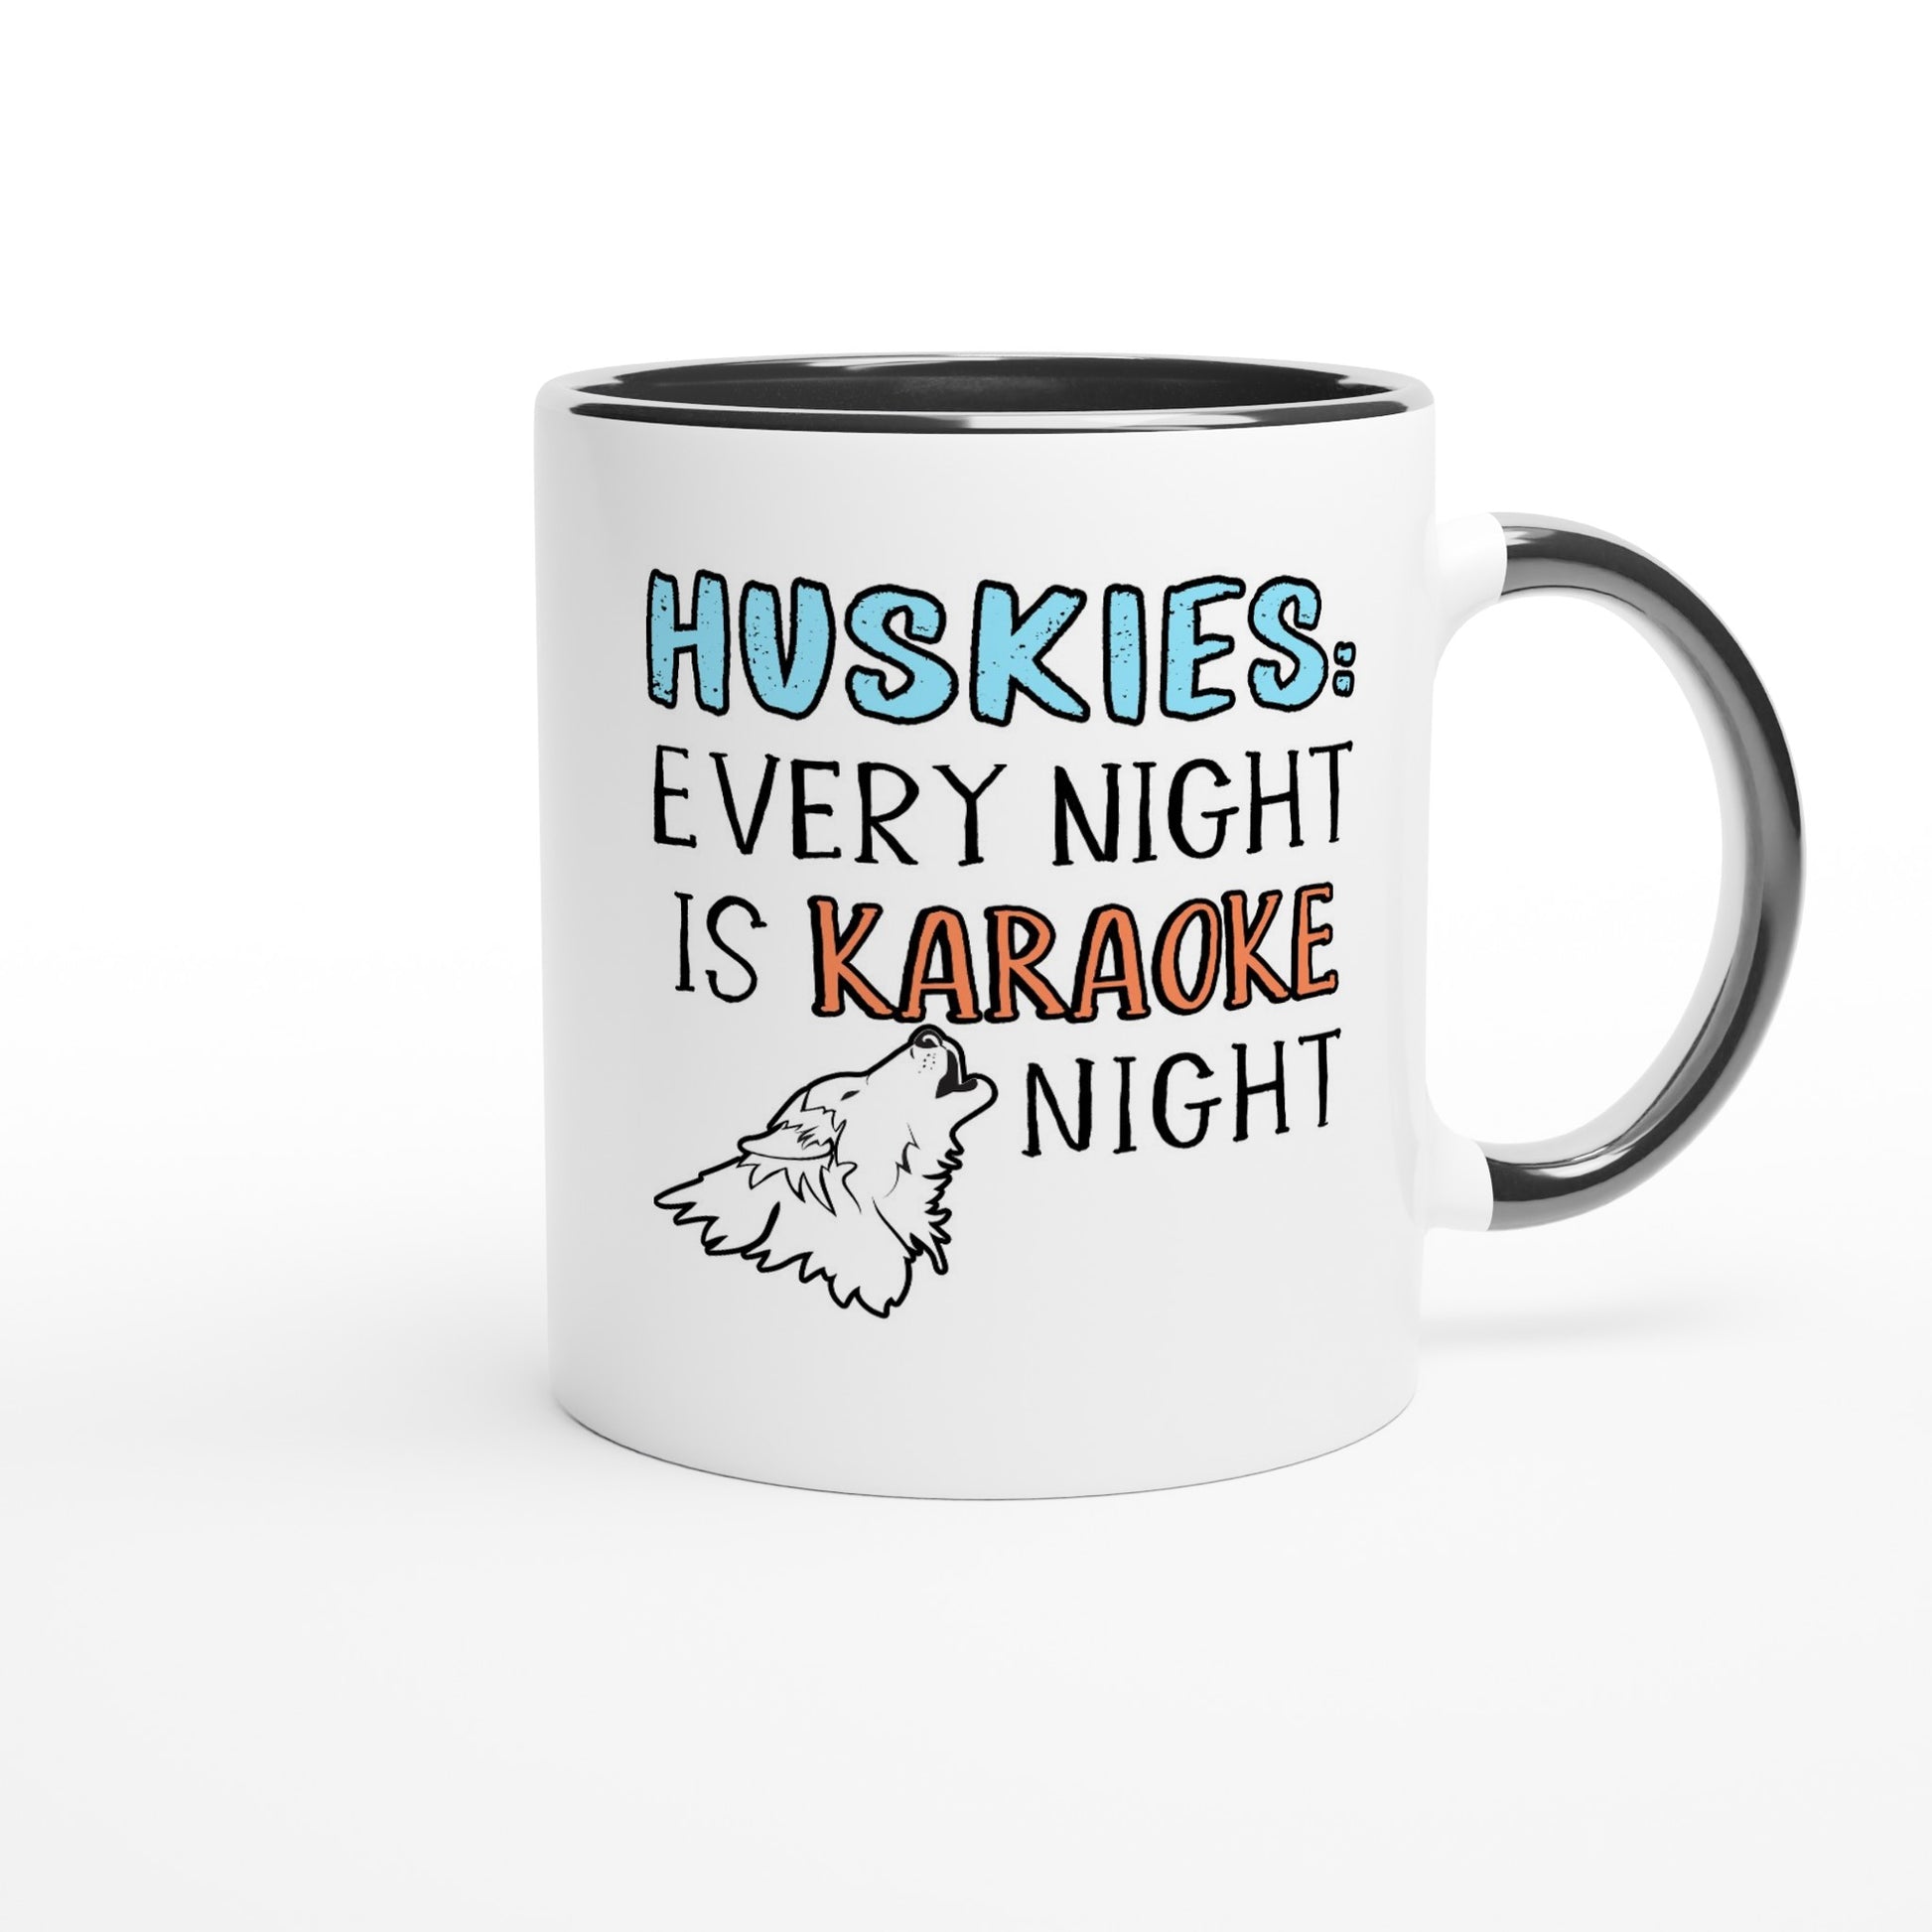 White ceramic coffee mug with the design: "HUSKIES: Every Night Is Karaoke Night.". The handle and interior are black